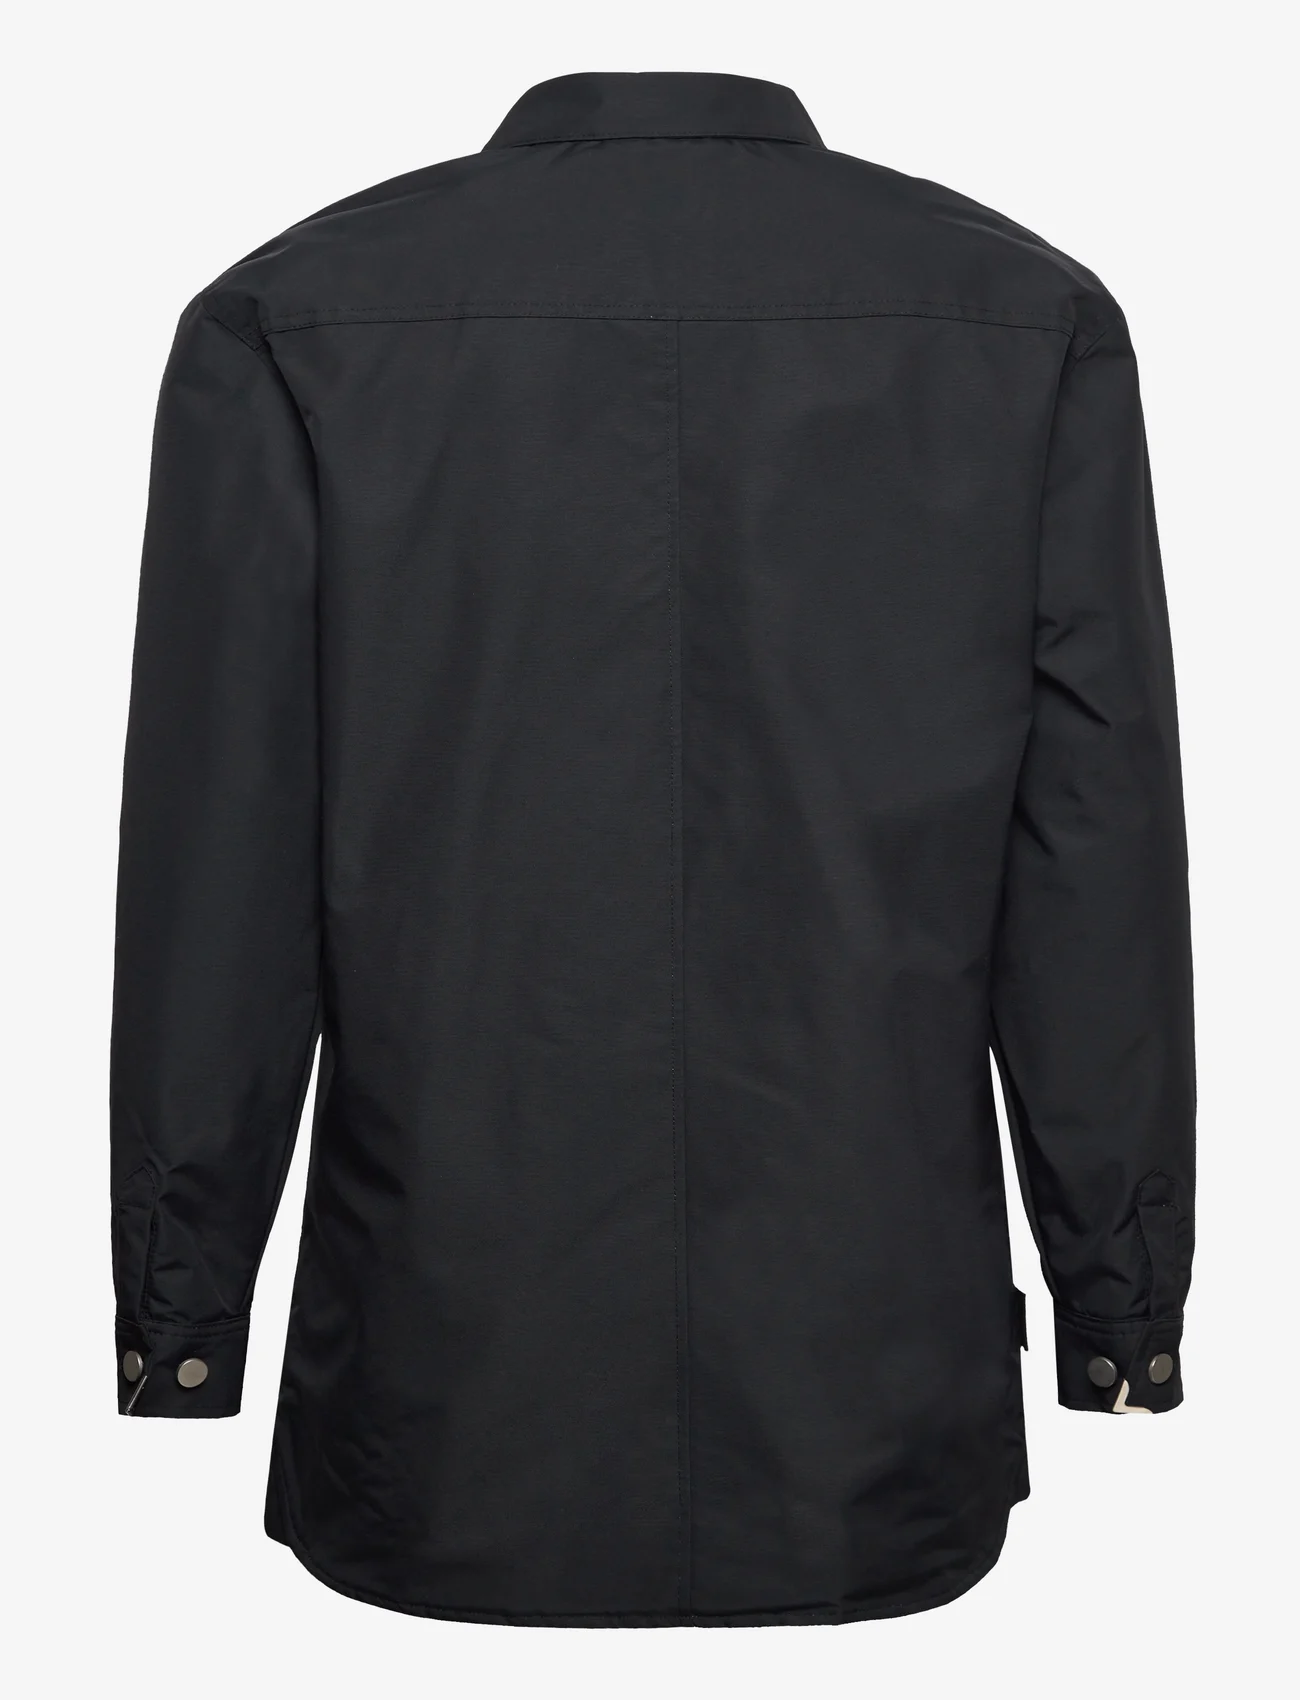 HAN Kjøbenhavn - Army Shirt Zip Long - black - 1